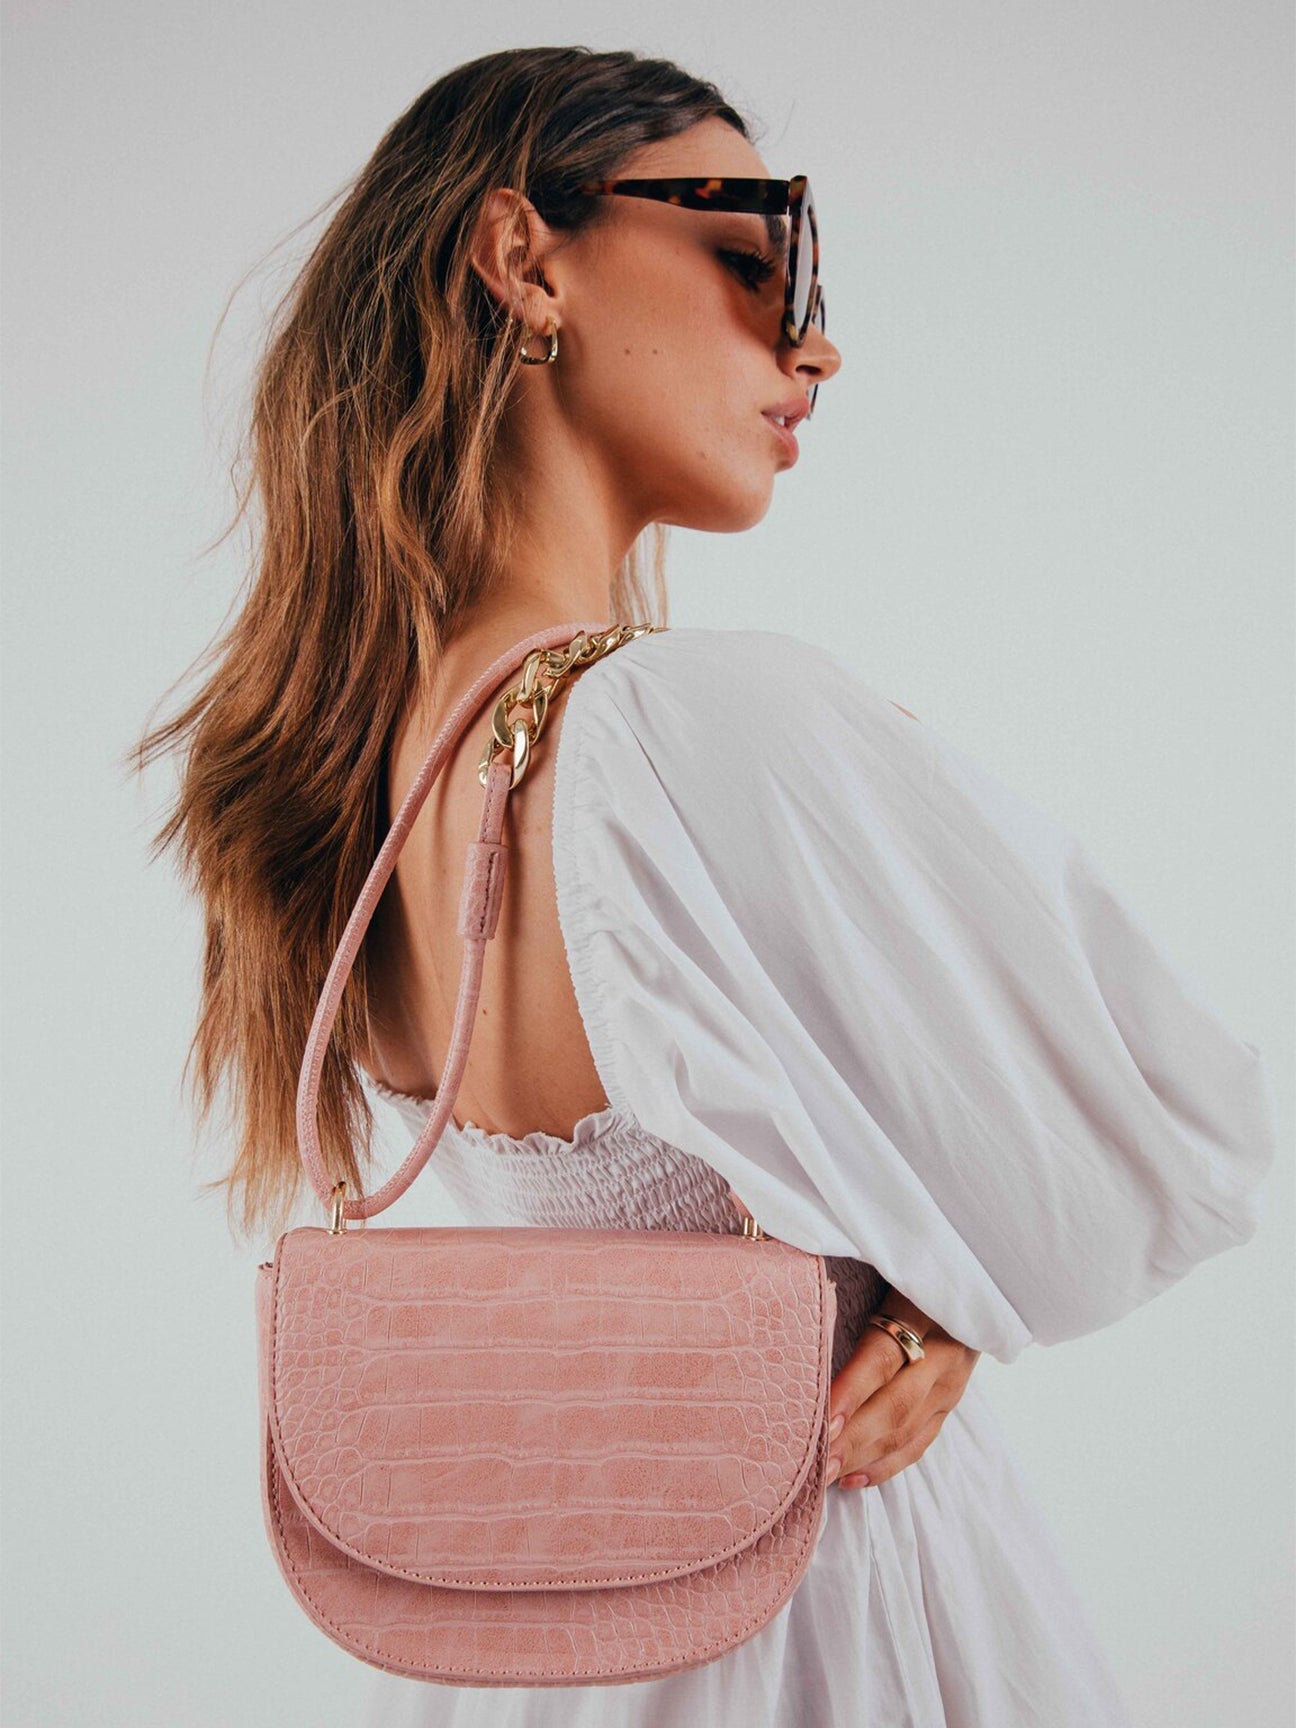 SVNX Micah Oval Shoulder Bag with Chain Detailing in Pale Pink